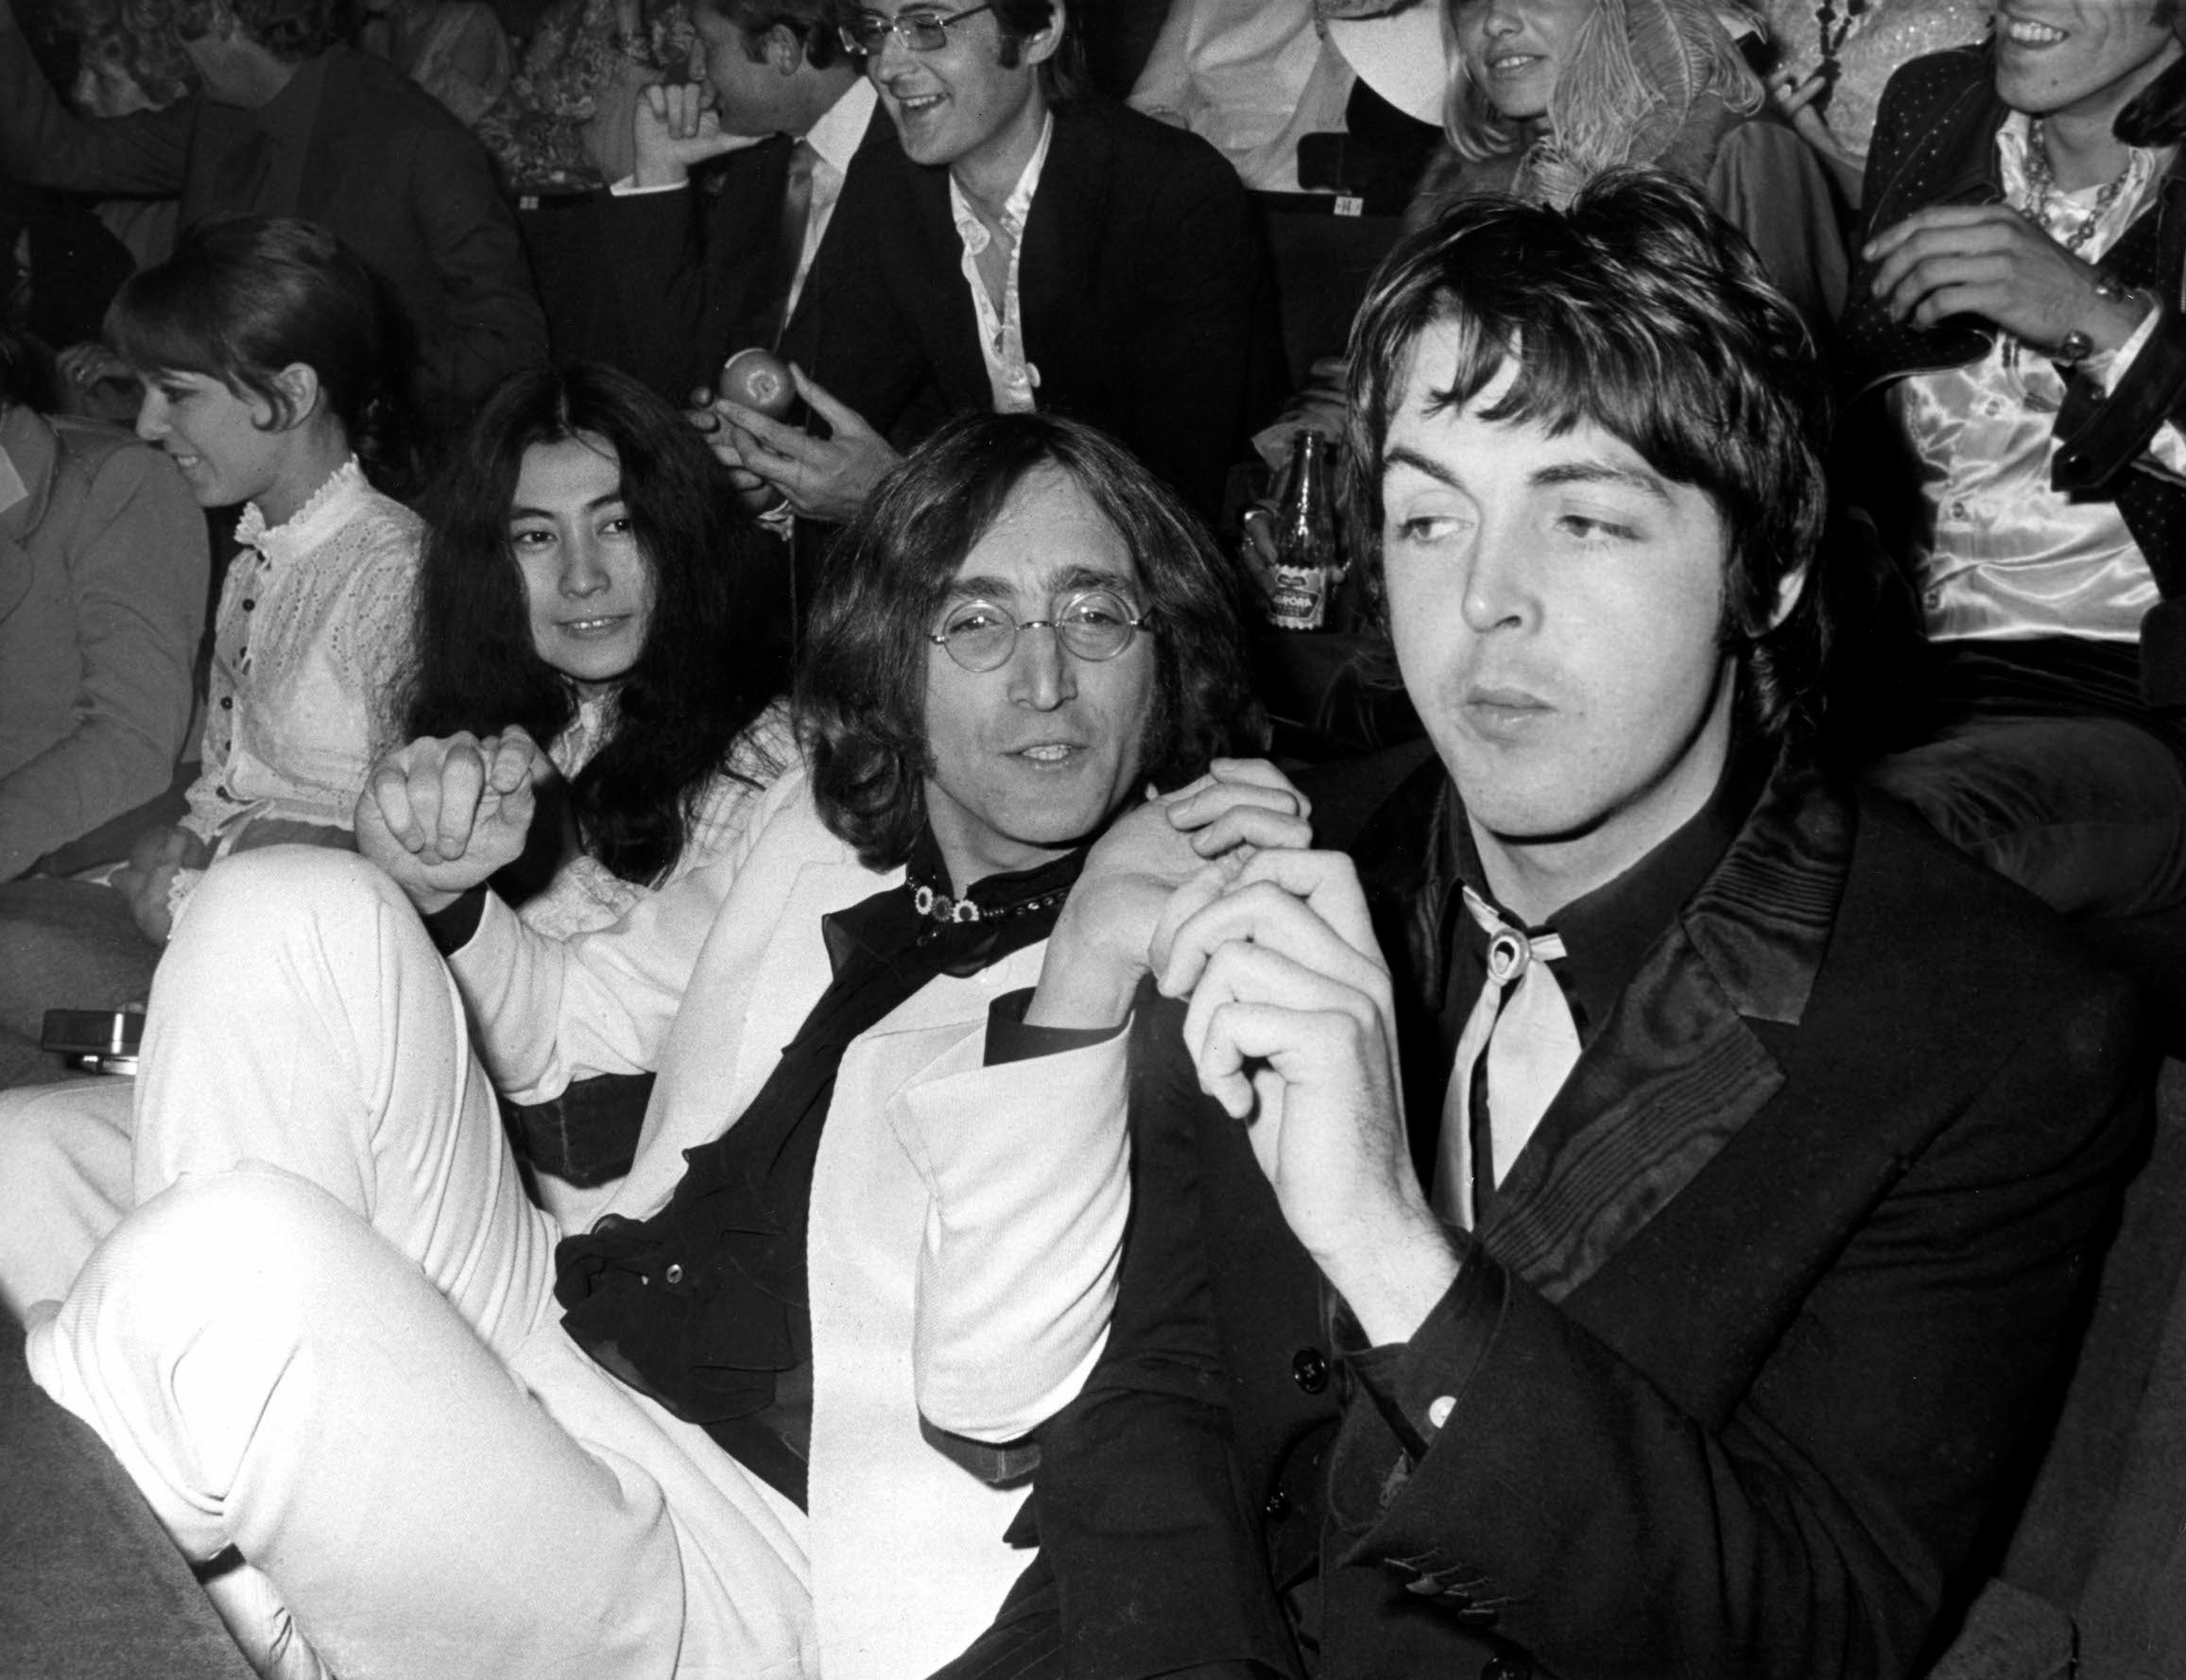 Yoko Ono, John Lennon, and Paul McCartney attend the premiere of Yellow Submarine